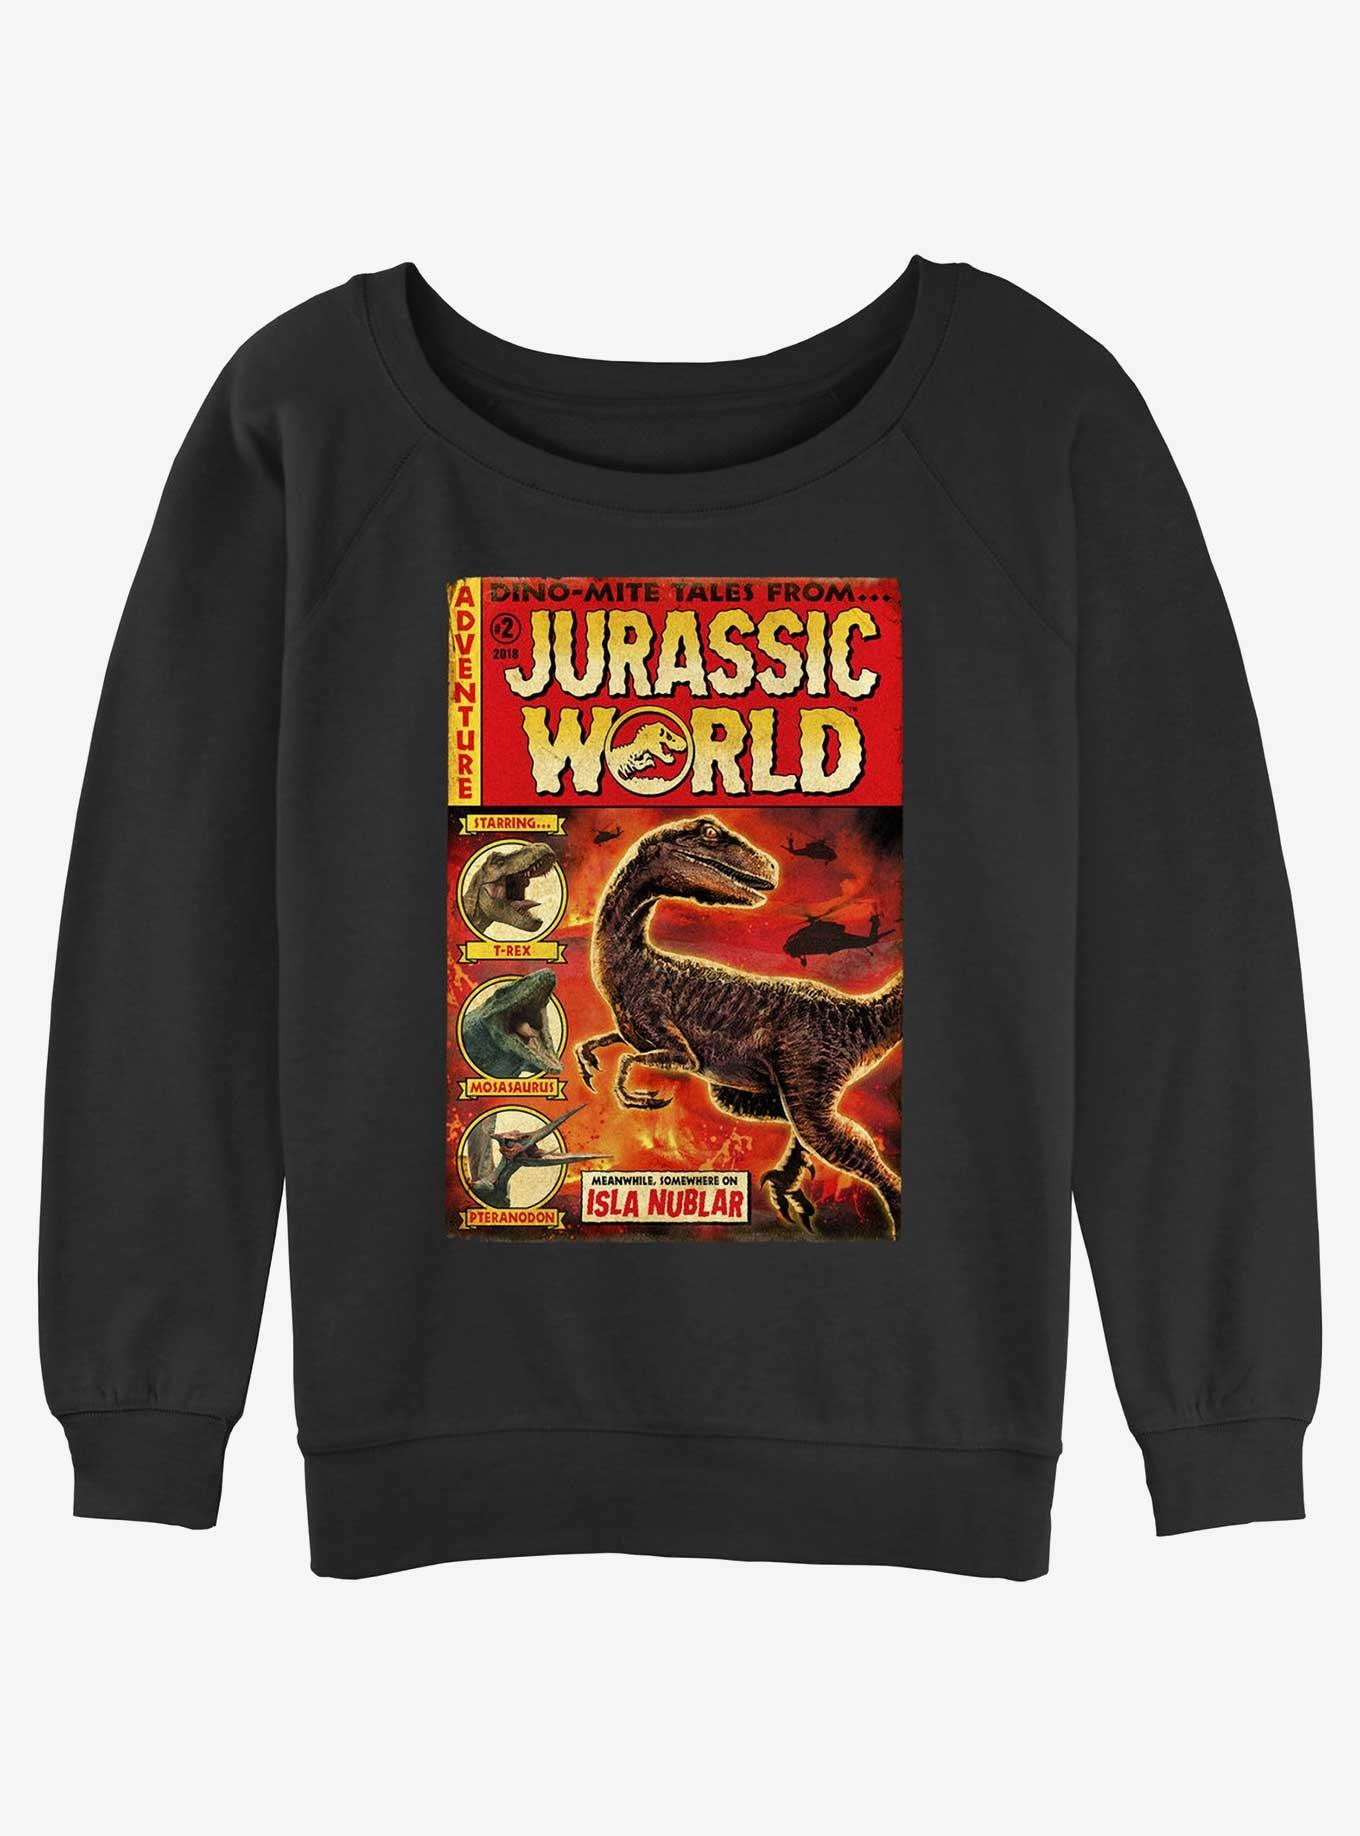 Jurassic Park Dino-Mite Tales Girls Slouchy Sweatshirt